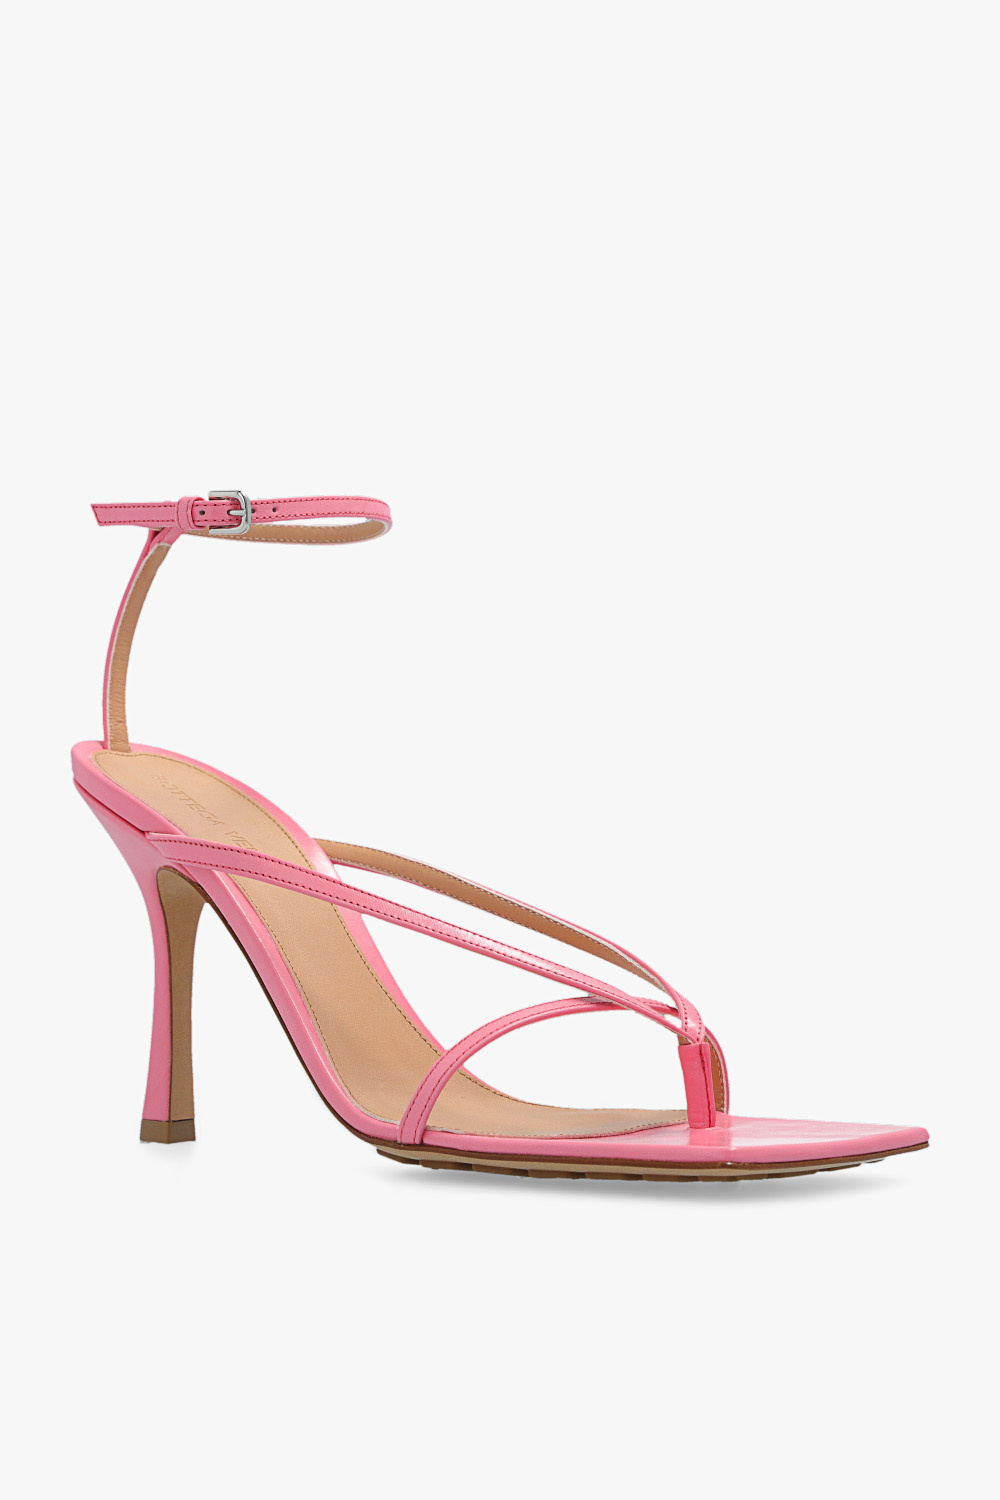 bottega dress Veneta ‘Stretch’ heeled sandals